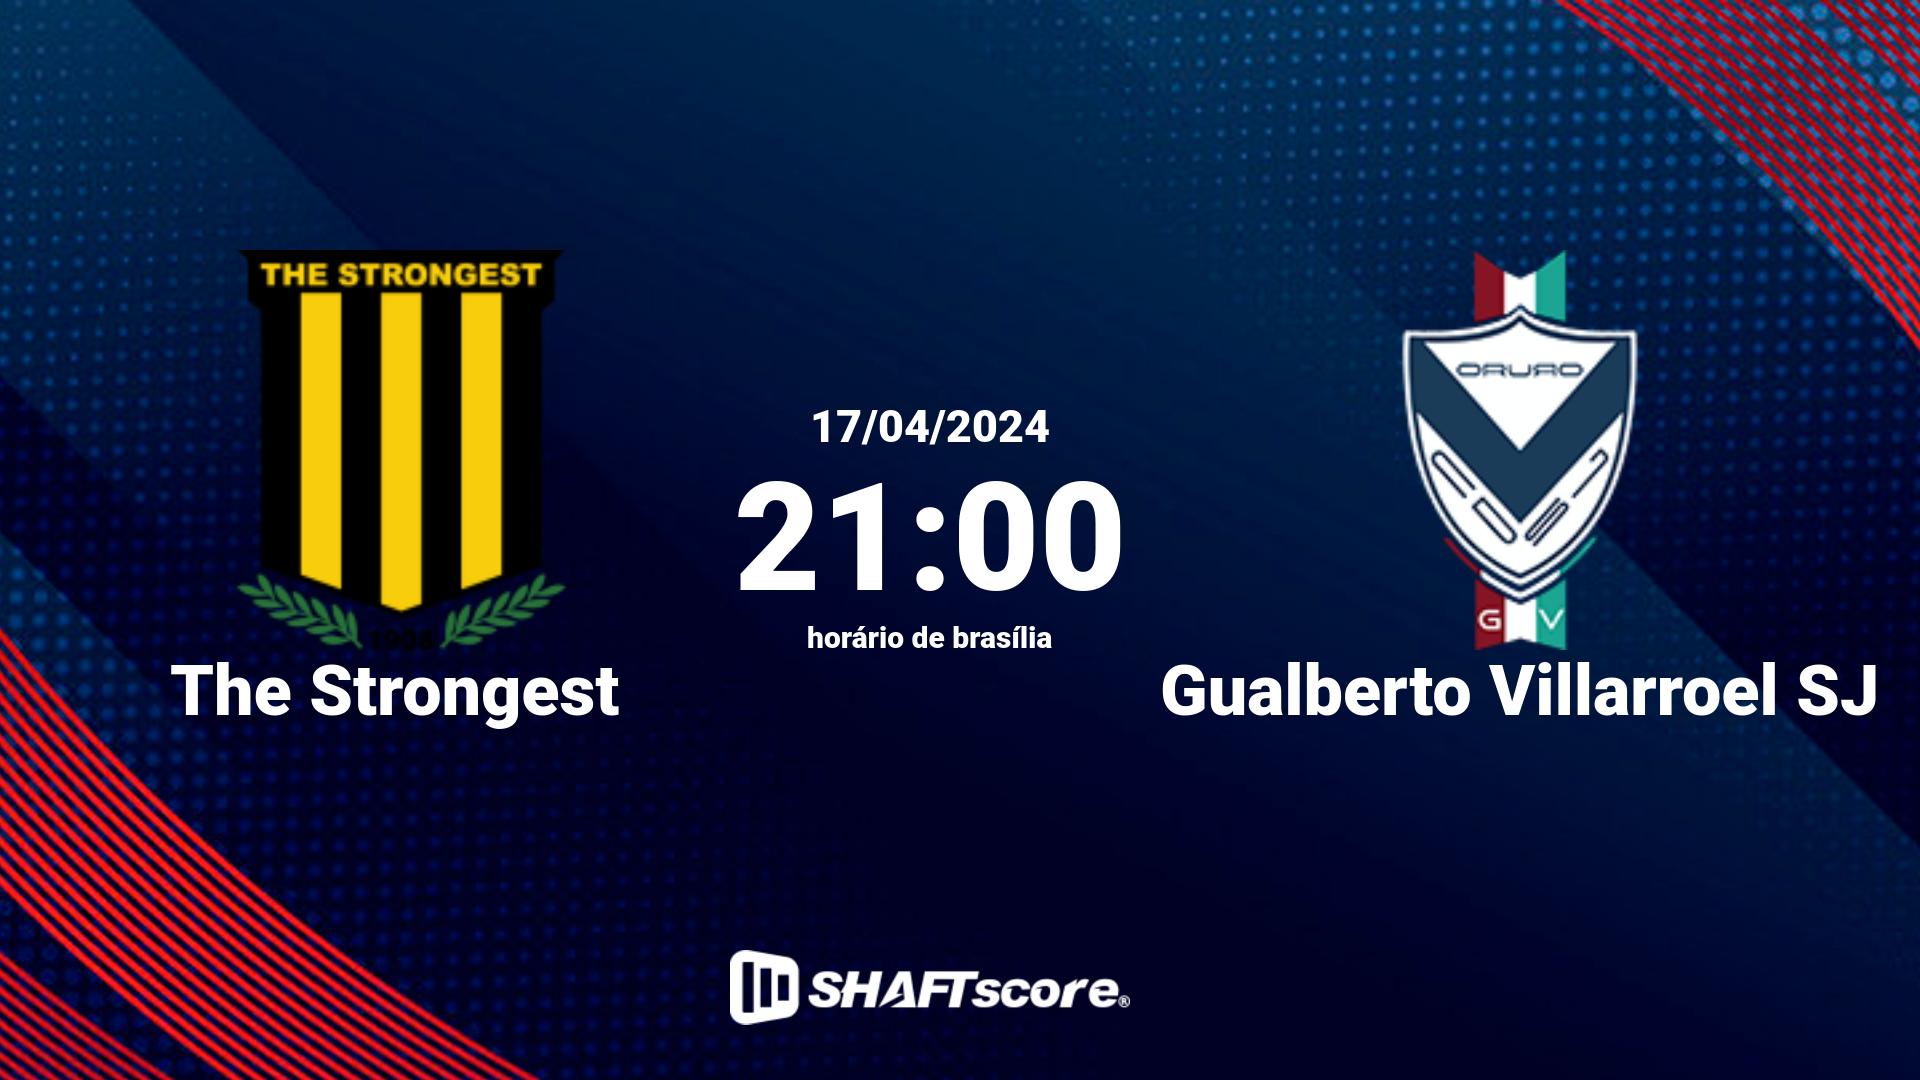 Estatísticas do jogo The Strongest vs Gualberto Villarroel SJ 17.04 21:00